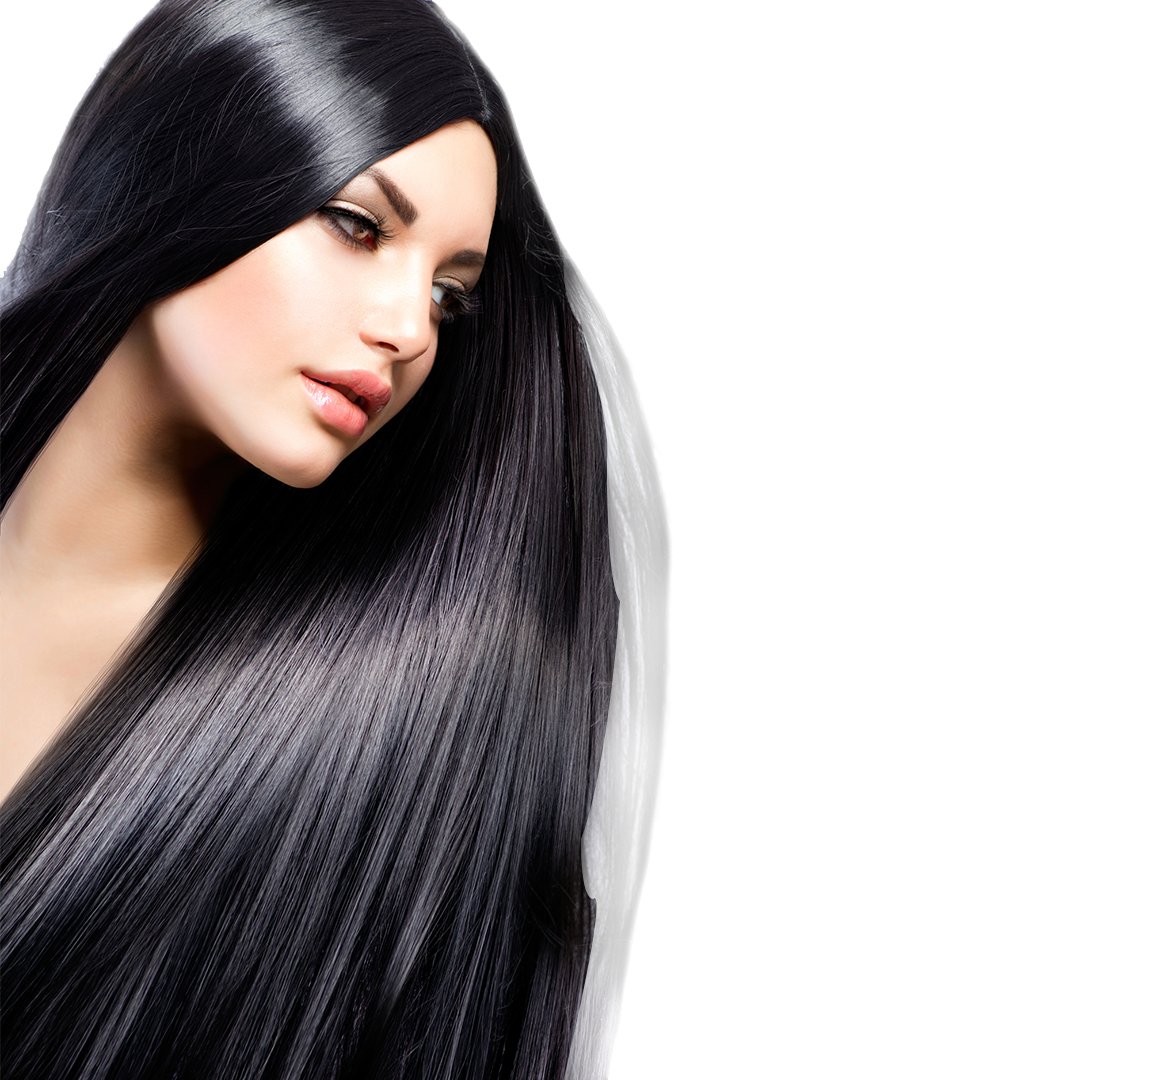 Black Hair Model PNG Image